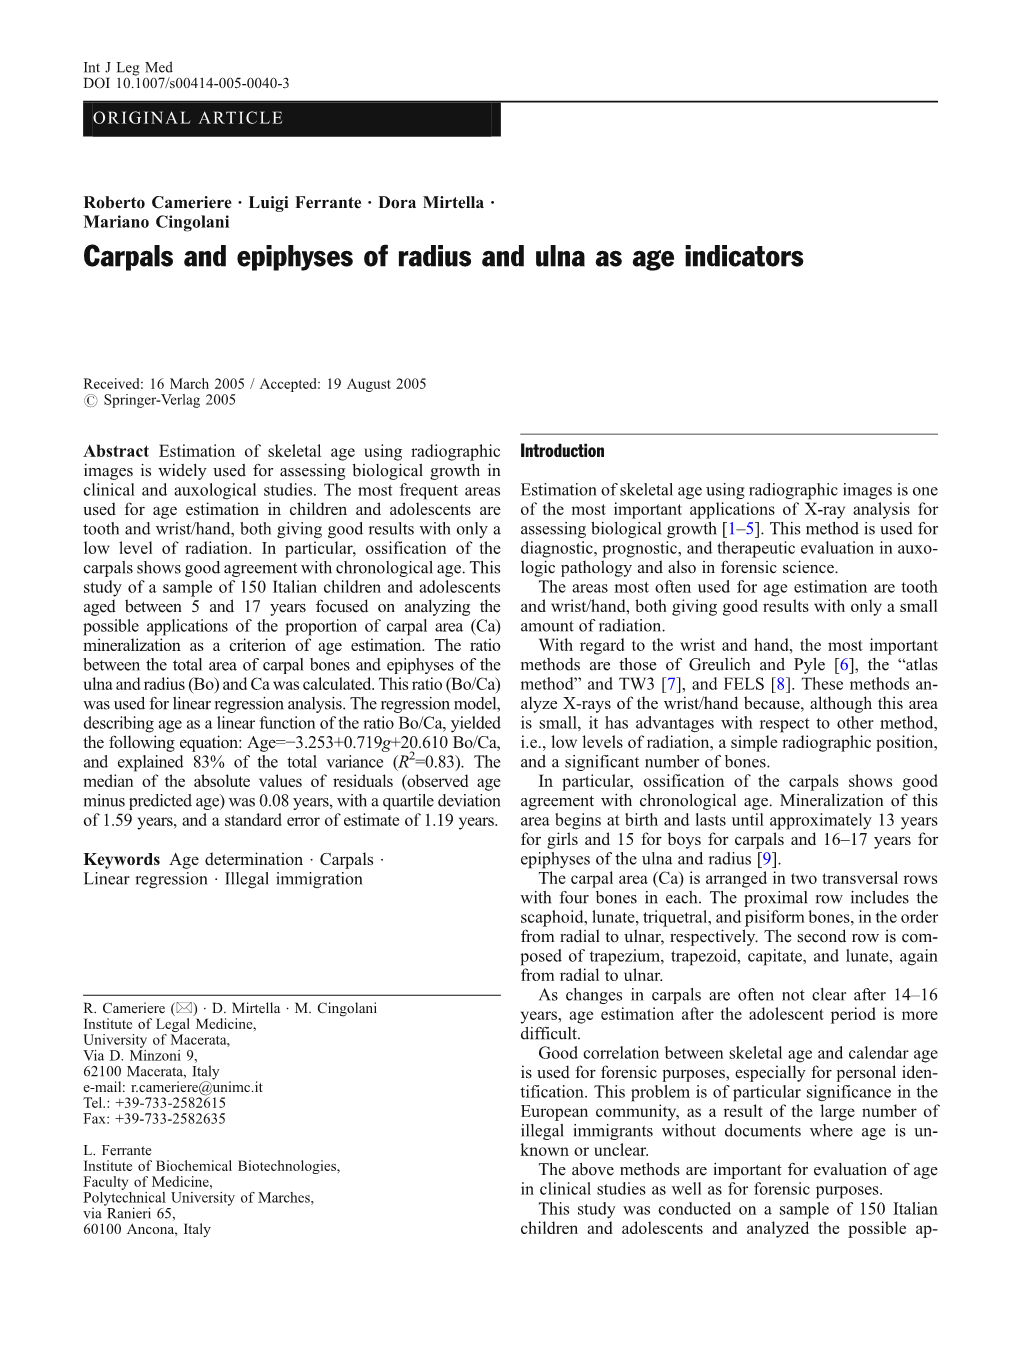 Carpals and Epiphyses of Radius and Ulna As Age Indicators